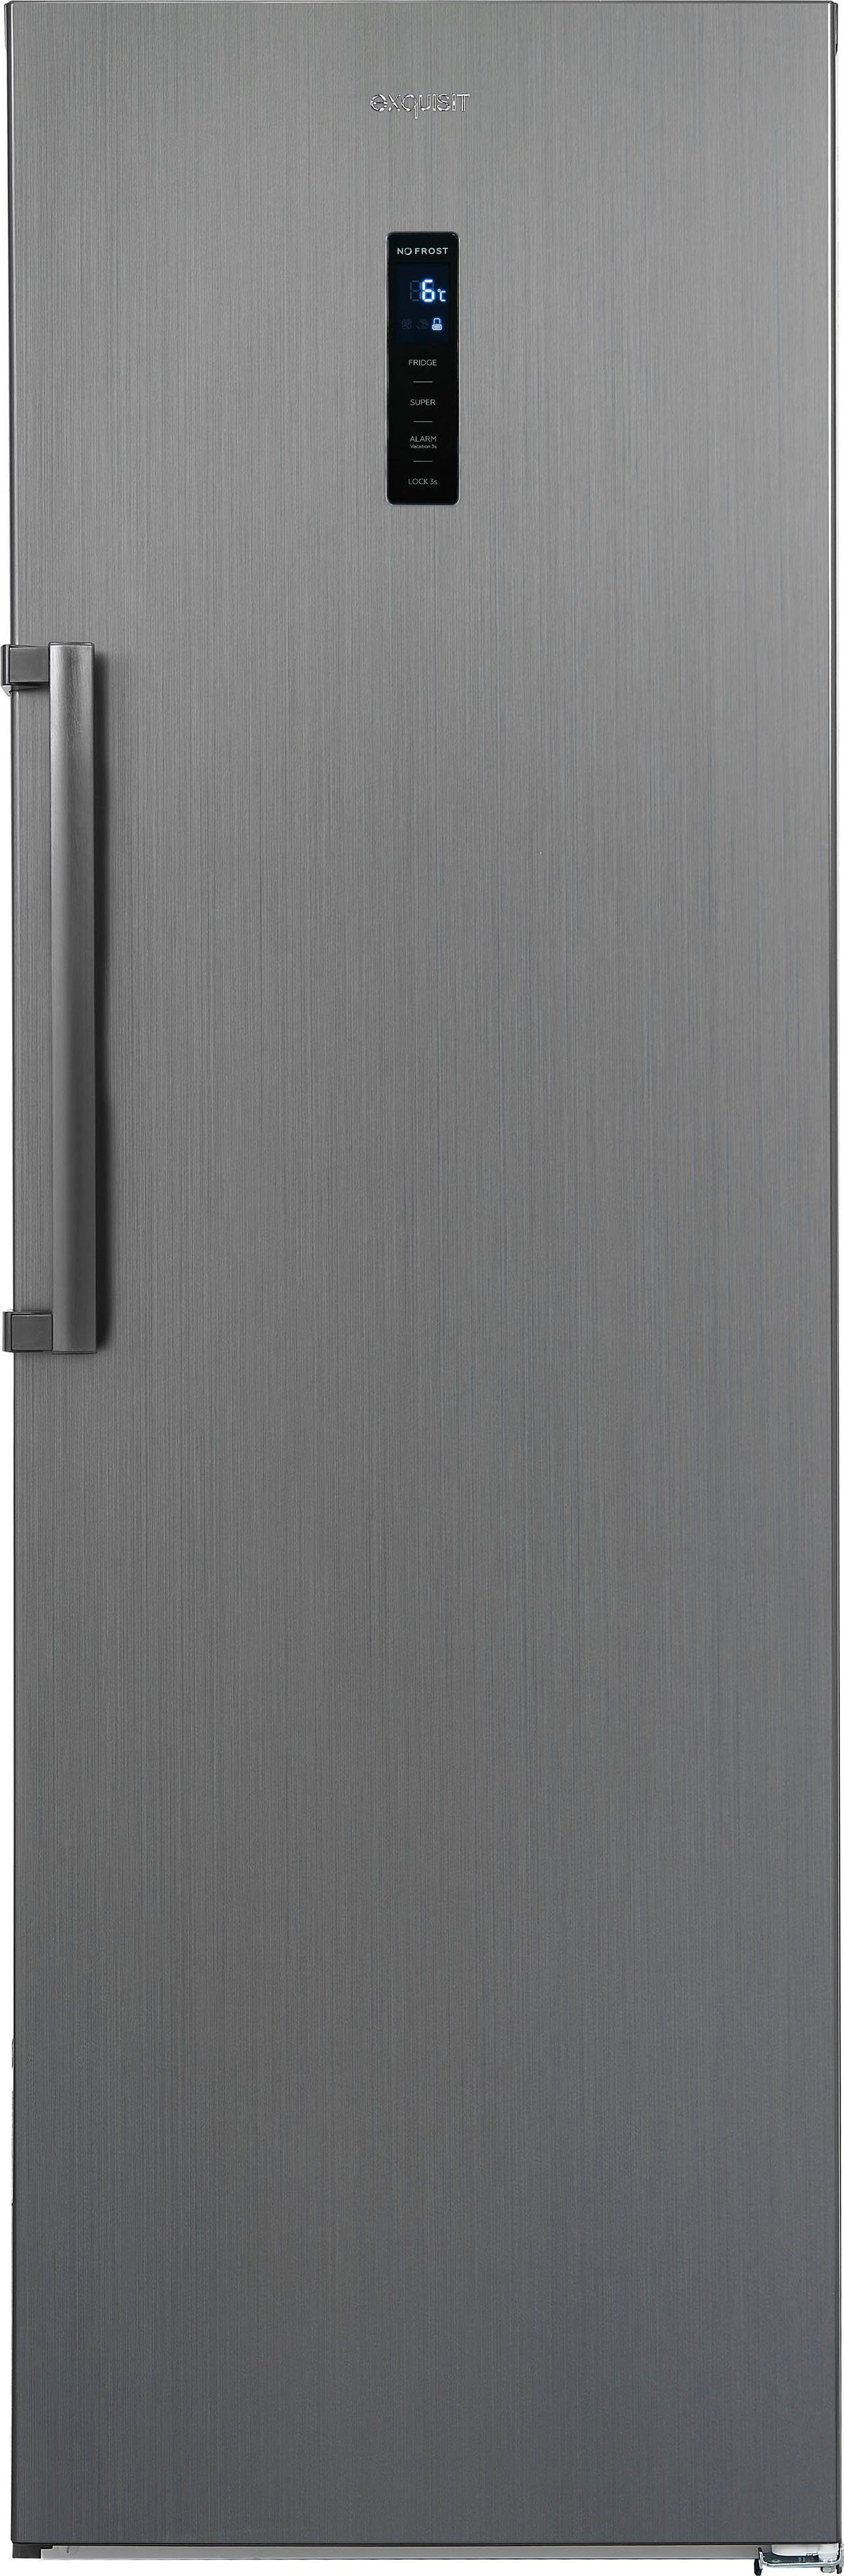 exquisit Vollraumkühlschrank KS360-V-HE-040D, 185 cm breit hoch, cm grau 60